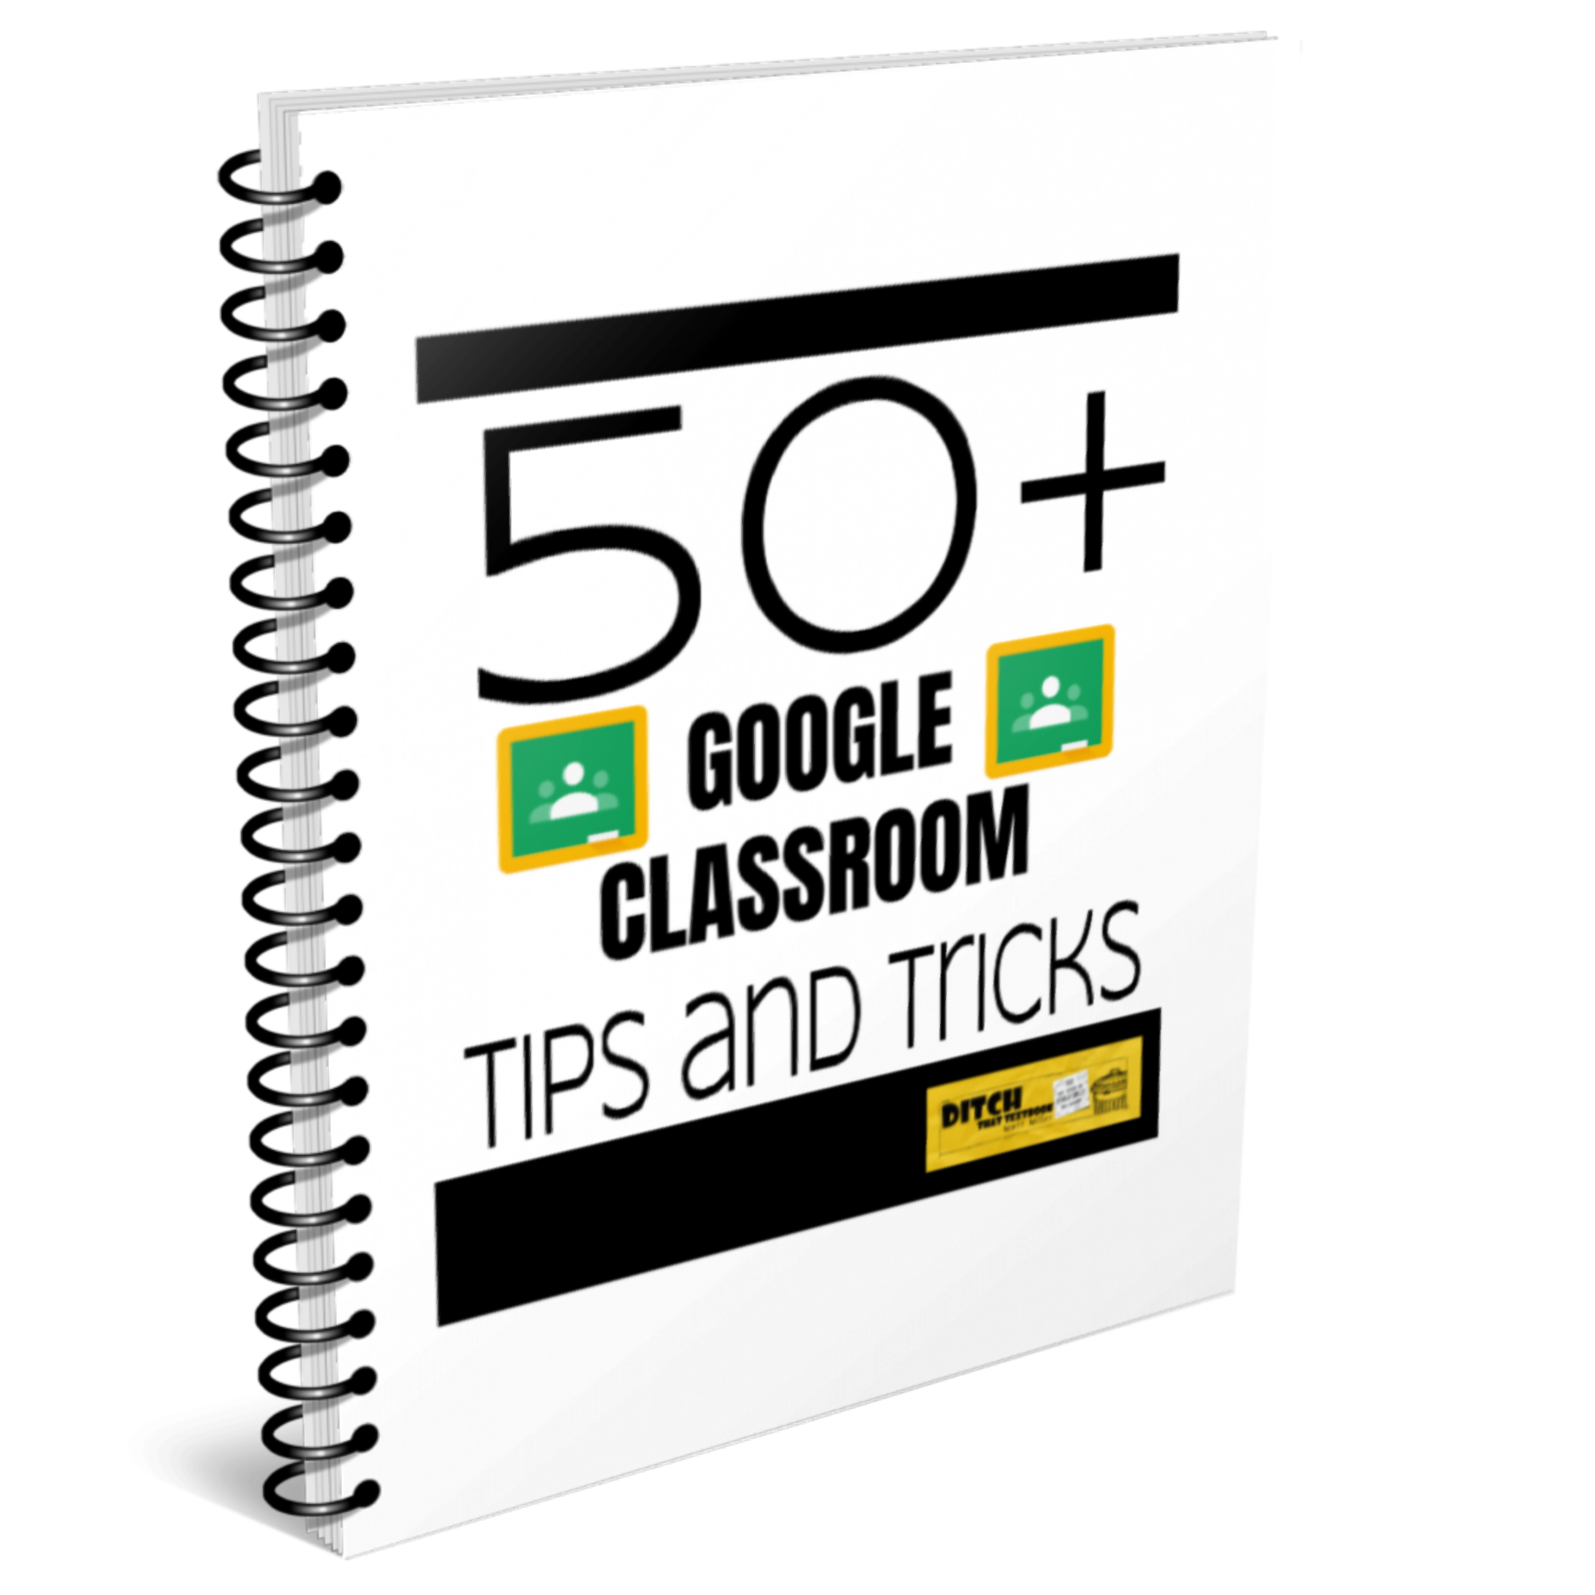 50+ Google Classroom Tips and Tricks ebook